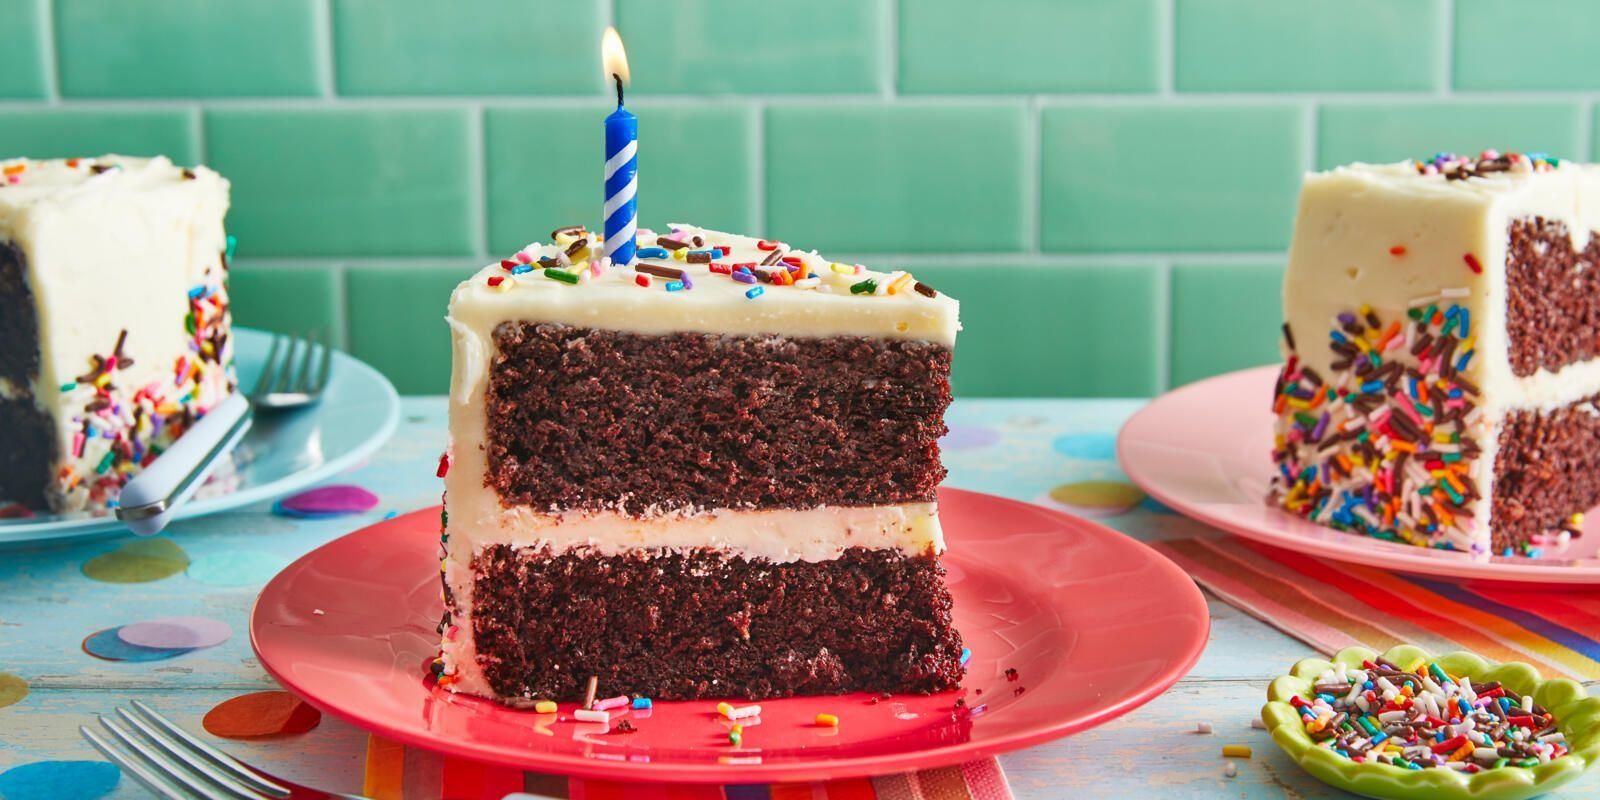 Theme cake for a media person 🙂 Birthday special cake #themecake  #ashasbakeandfrost | Instagram